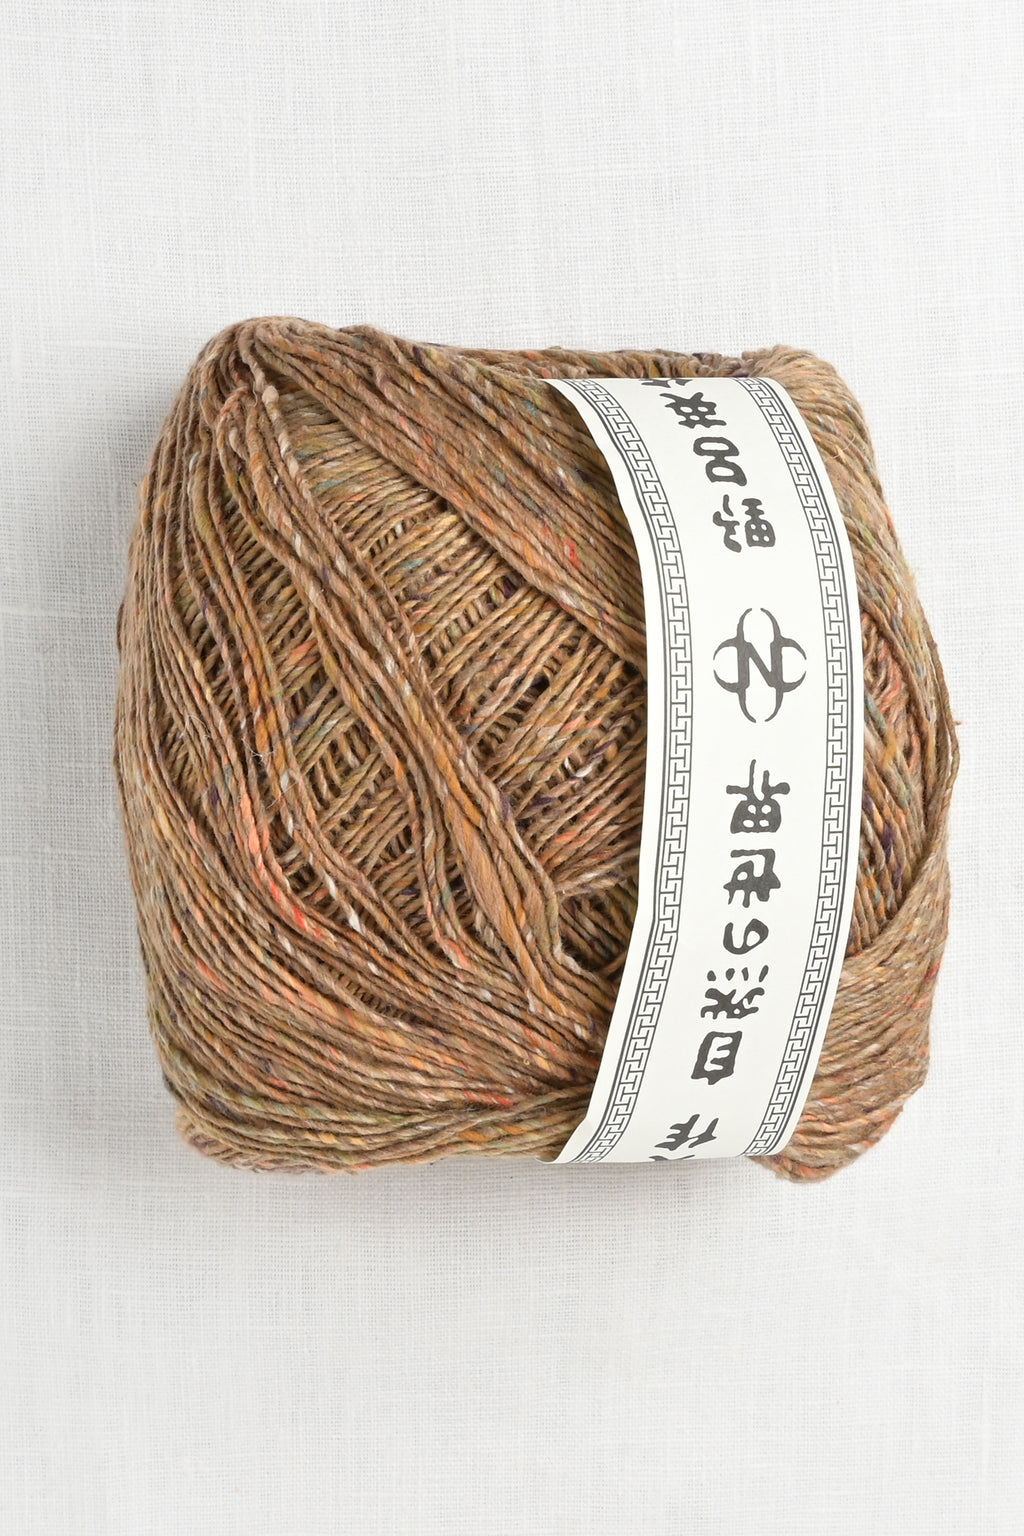 Noro Kakigori 05 Shimonoseki – Wool and Company